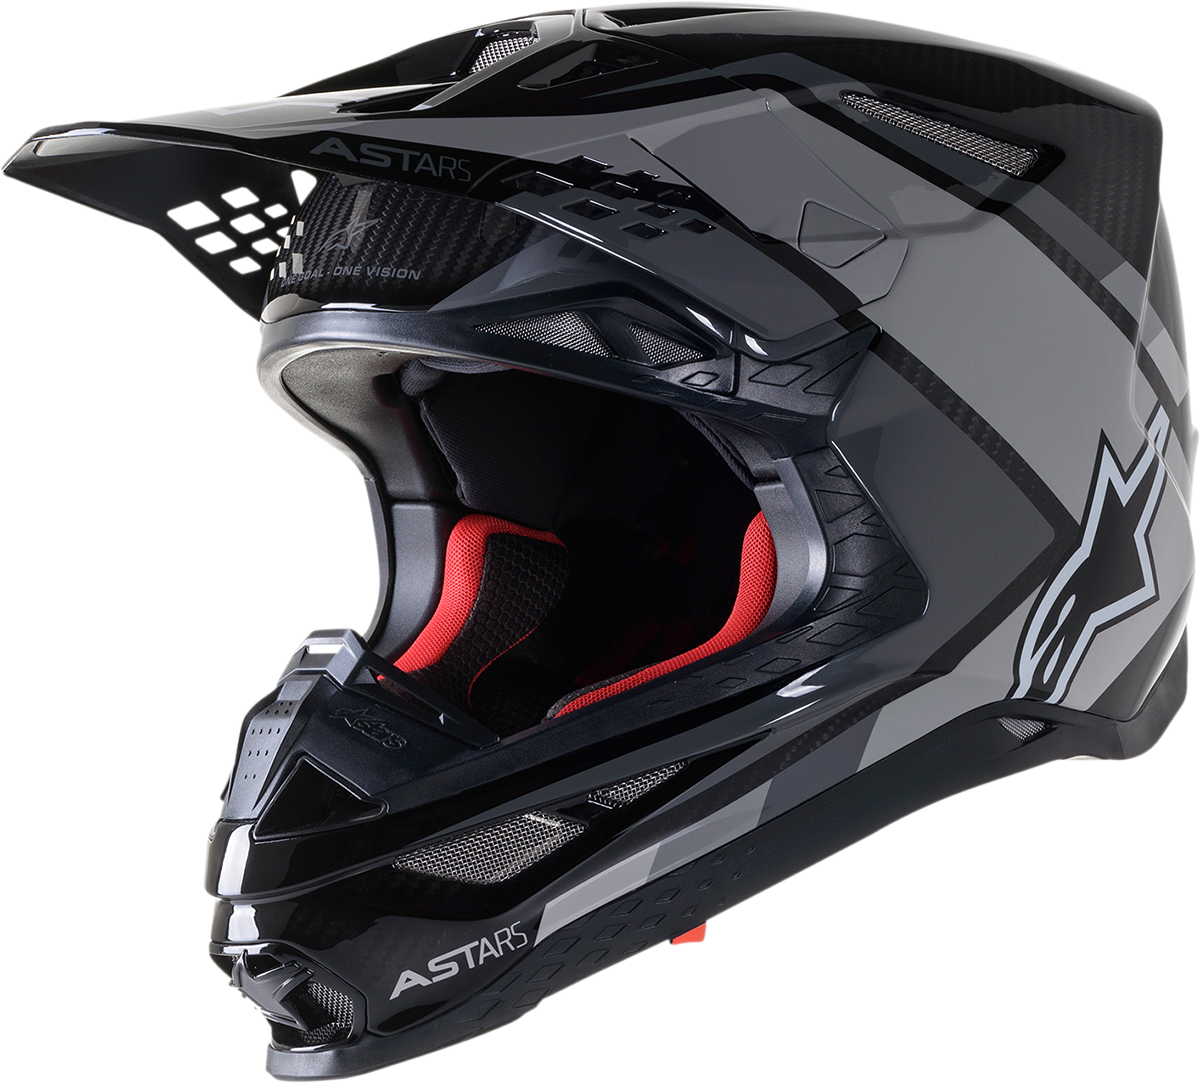 ALPINESTARS Supertech M10 Helmet - Meta 2 - MIPS® - Black/Gray/Gloss - Medium 8300422-1195-MD